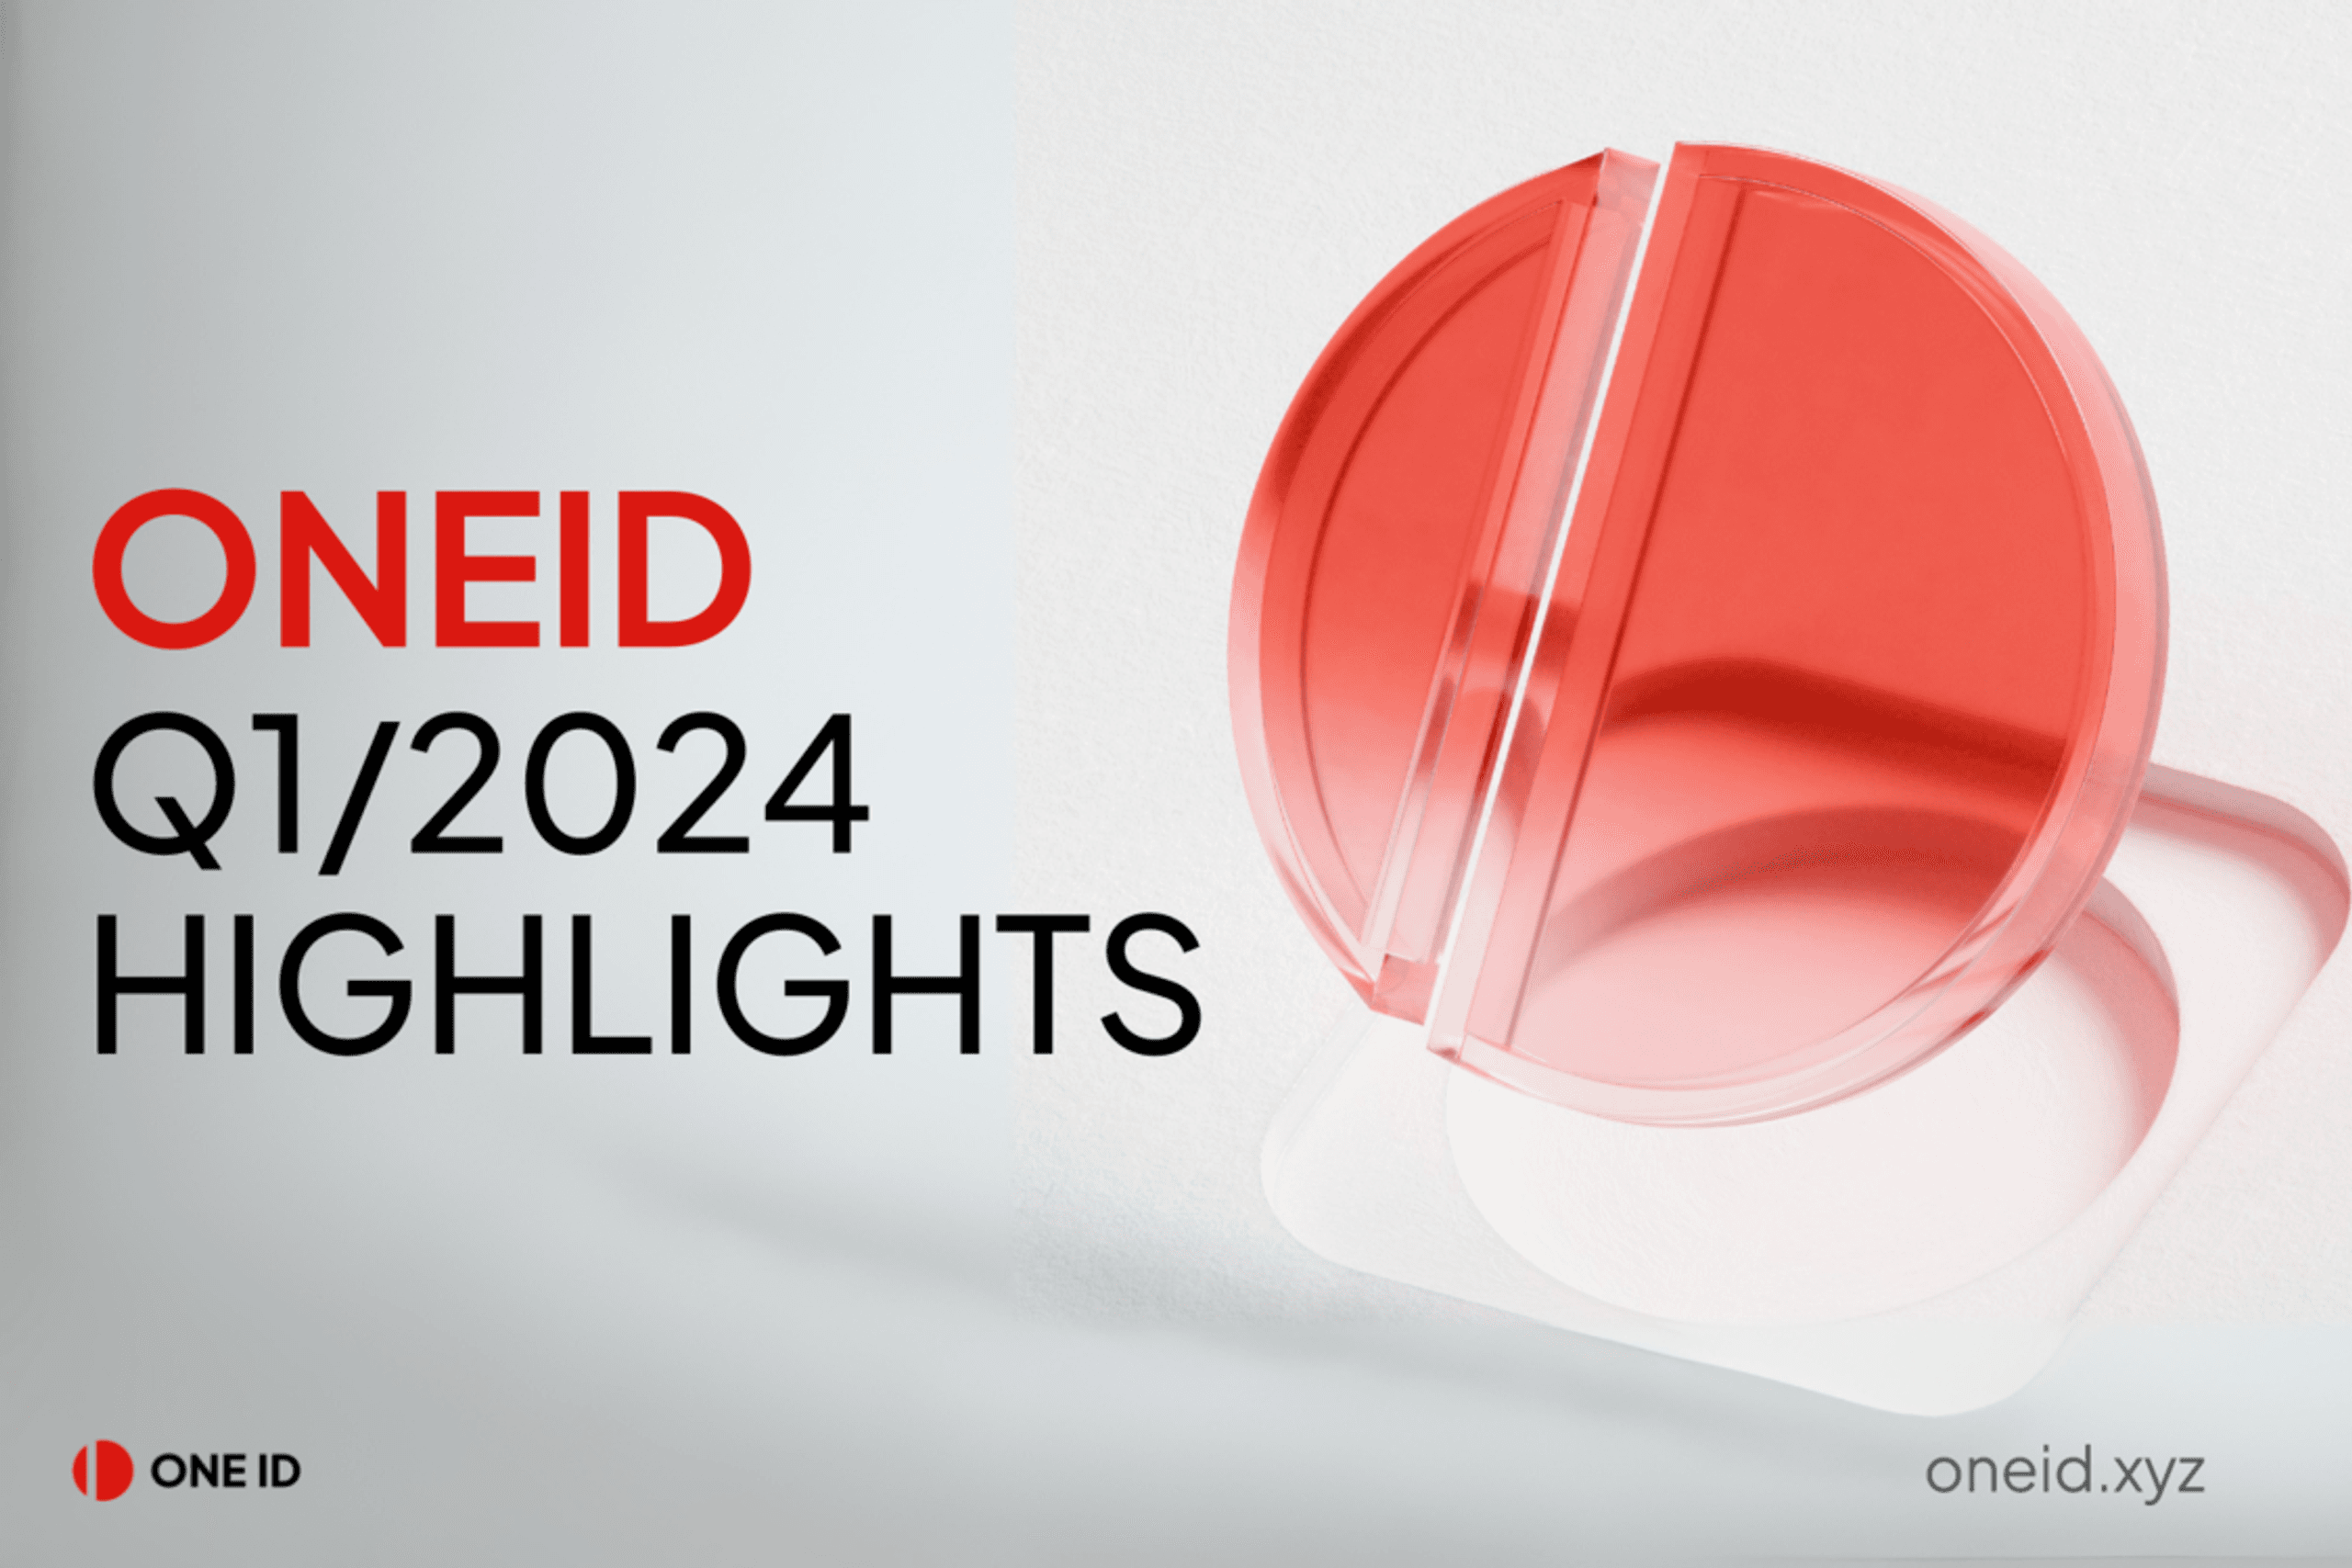 ONEID - Q1/2024 HIGHLIGHTS